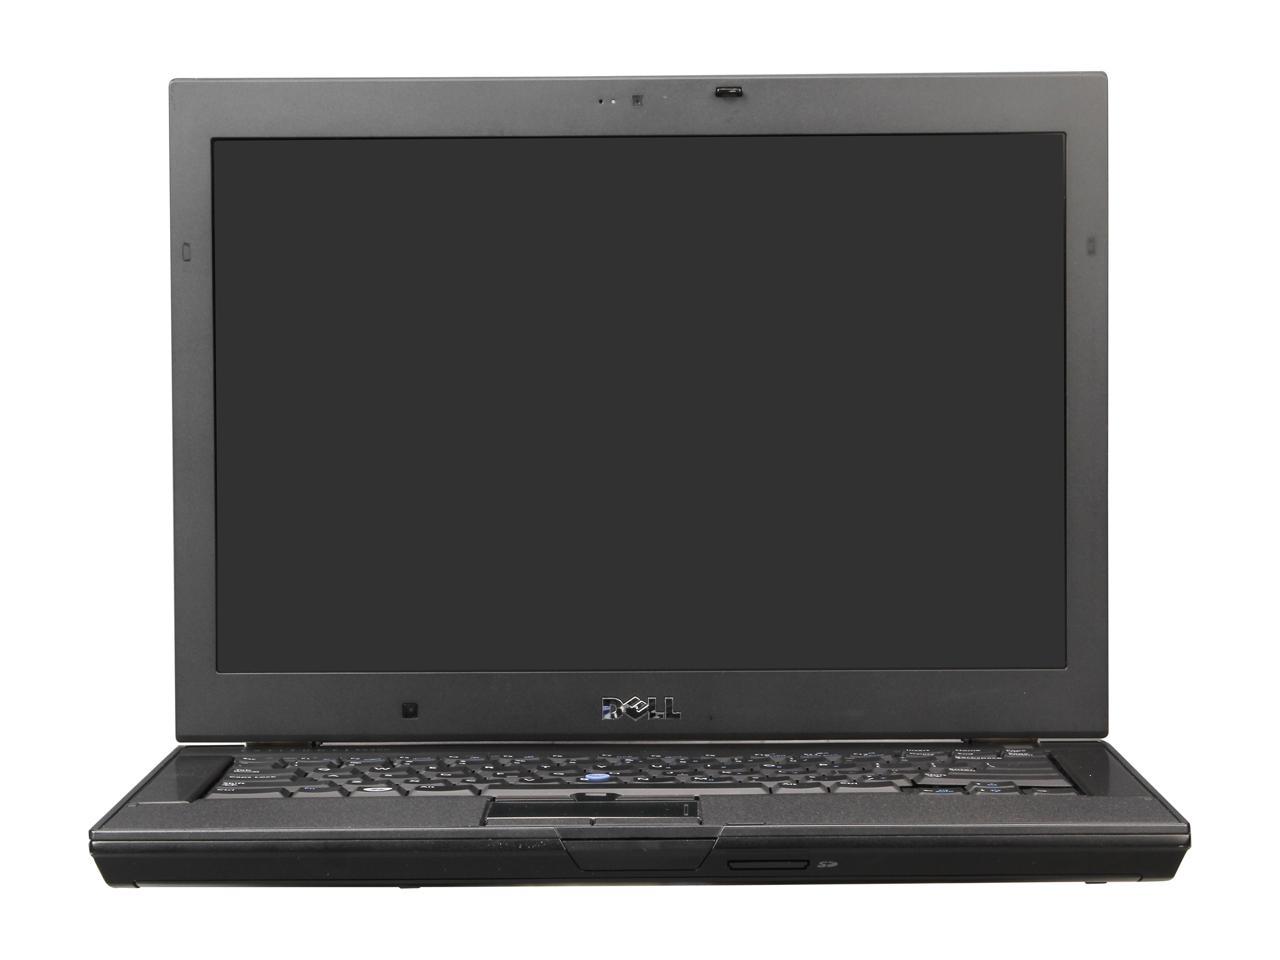 DELL Latitude E6400 Notebook with Intel Core 2 Duo 2.53Ghz, 4GB RAM, 120GB HDD, DVDROM, Windows 7 Professional 64 Bit